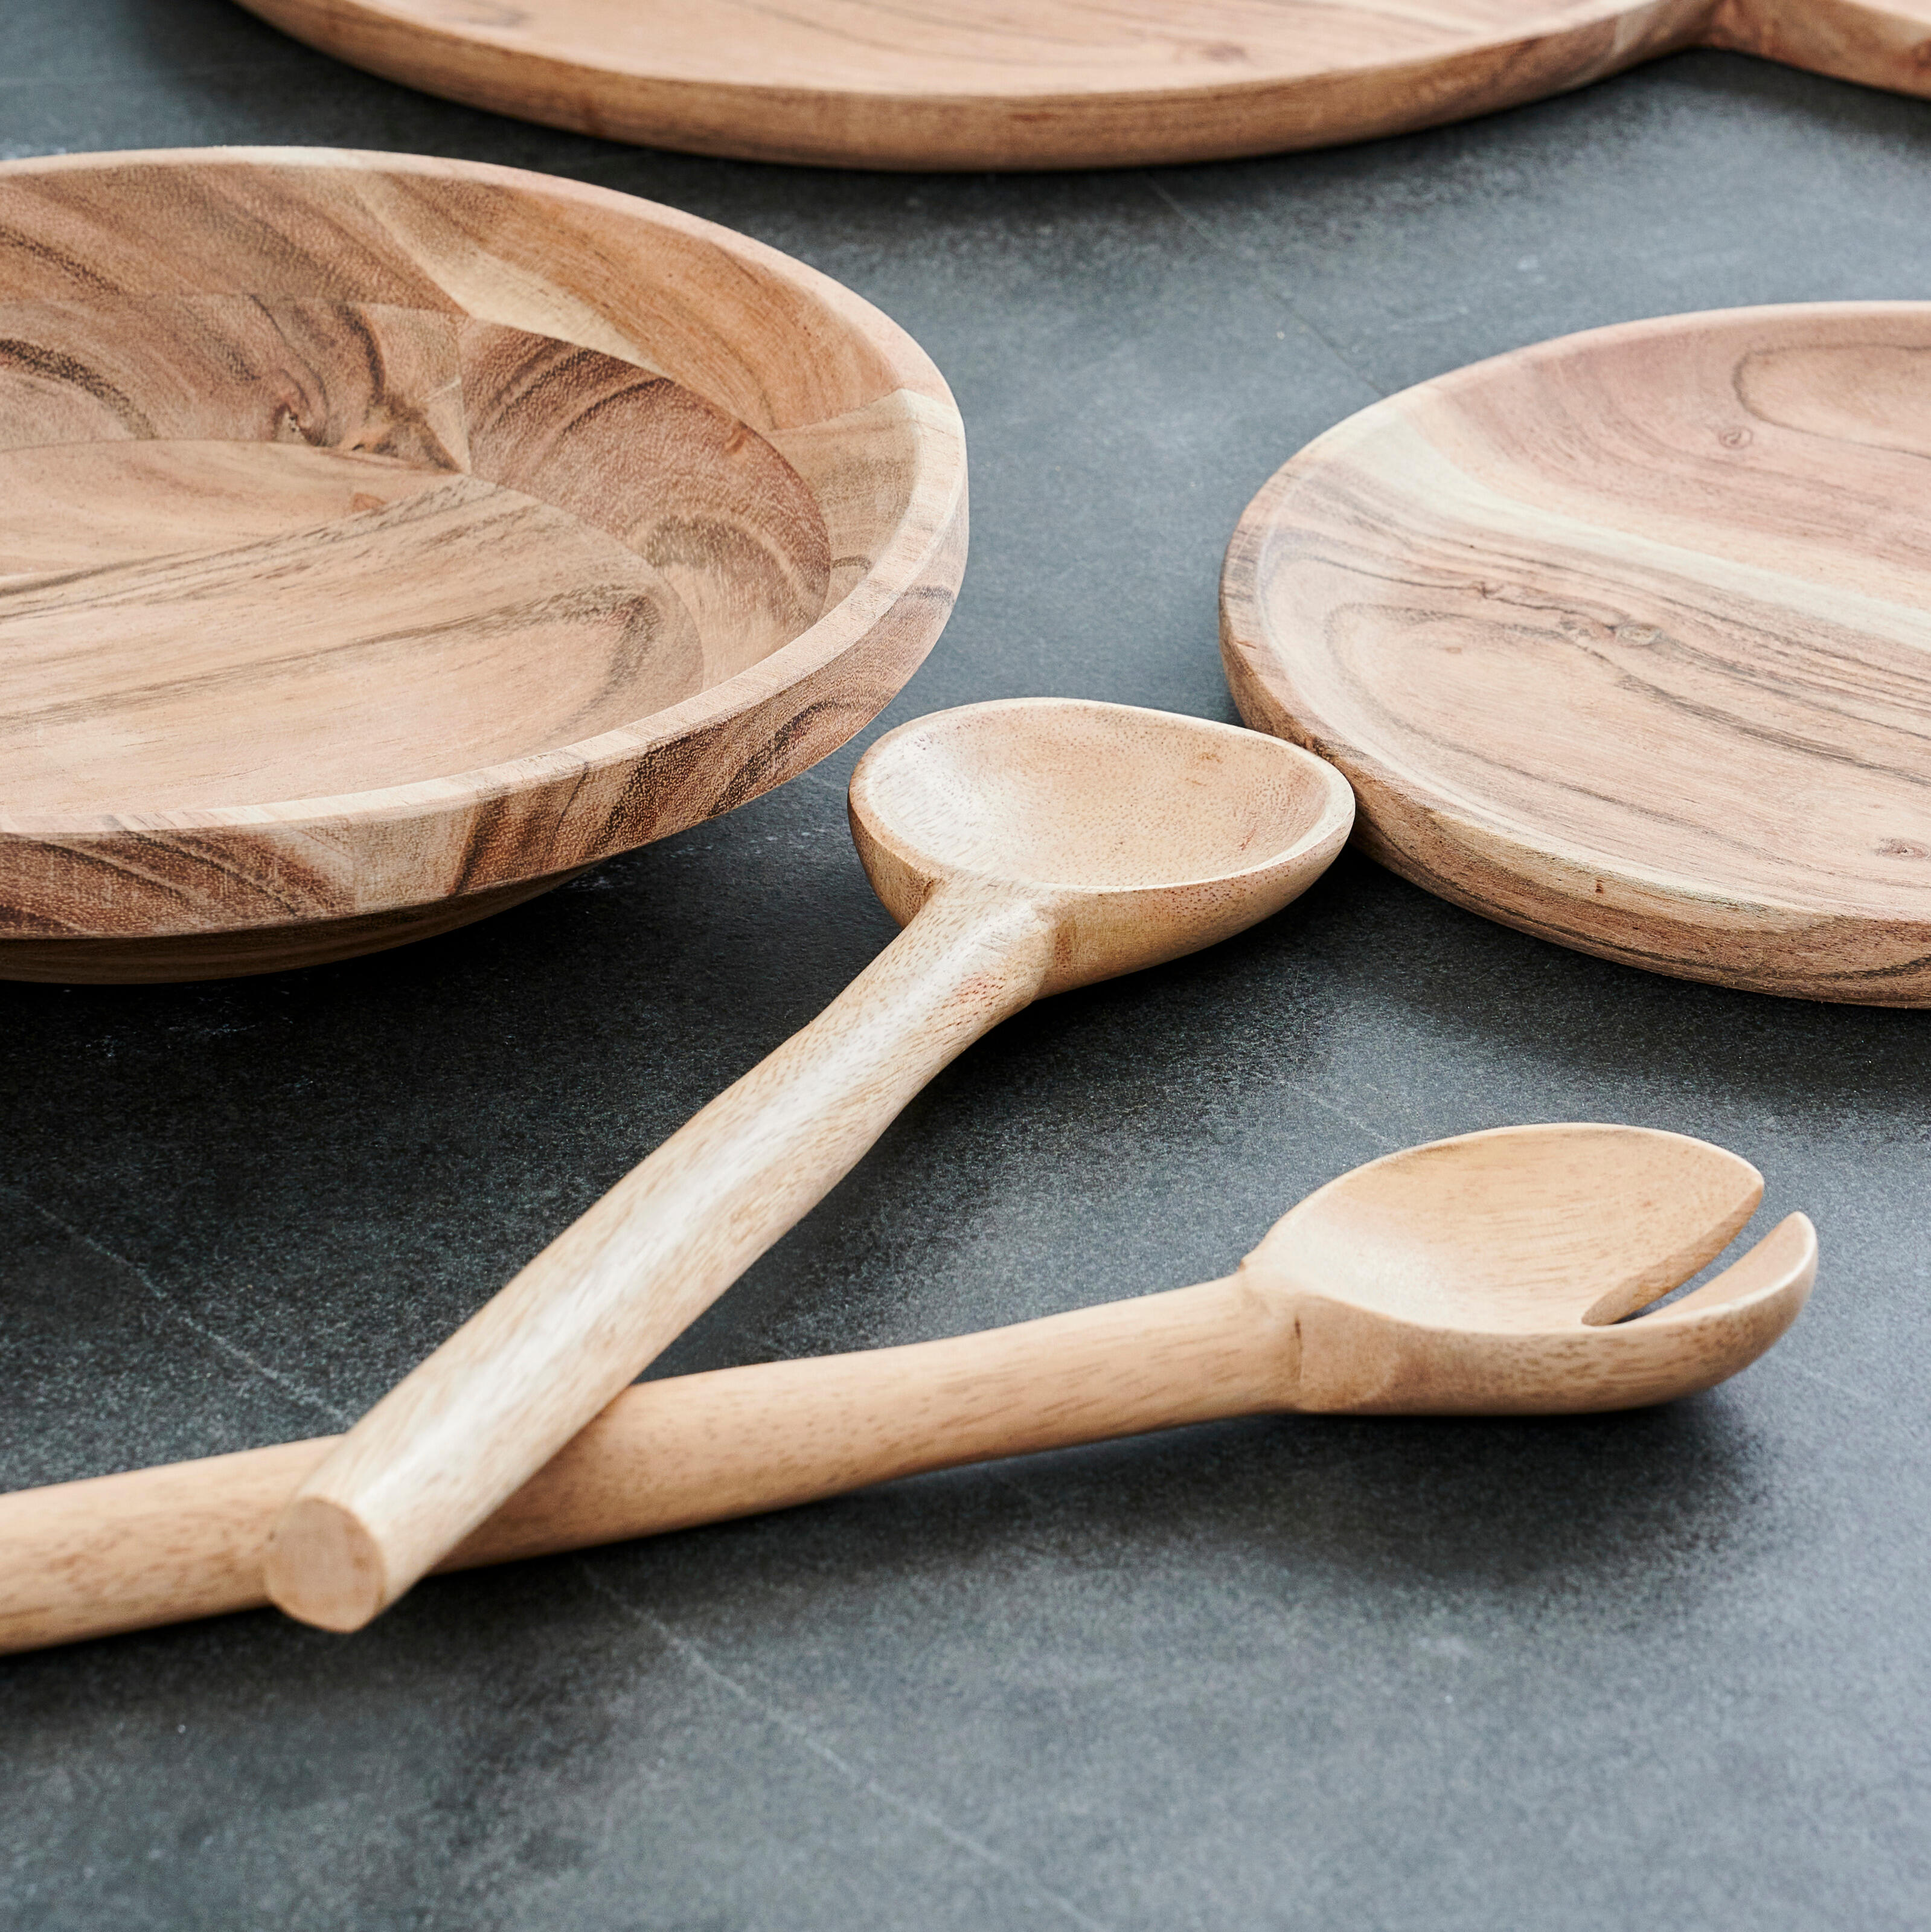 Posate per insalata di legno Matera – Acquista online